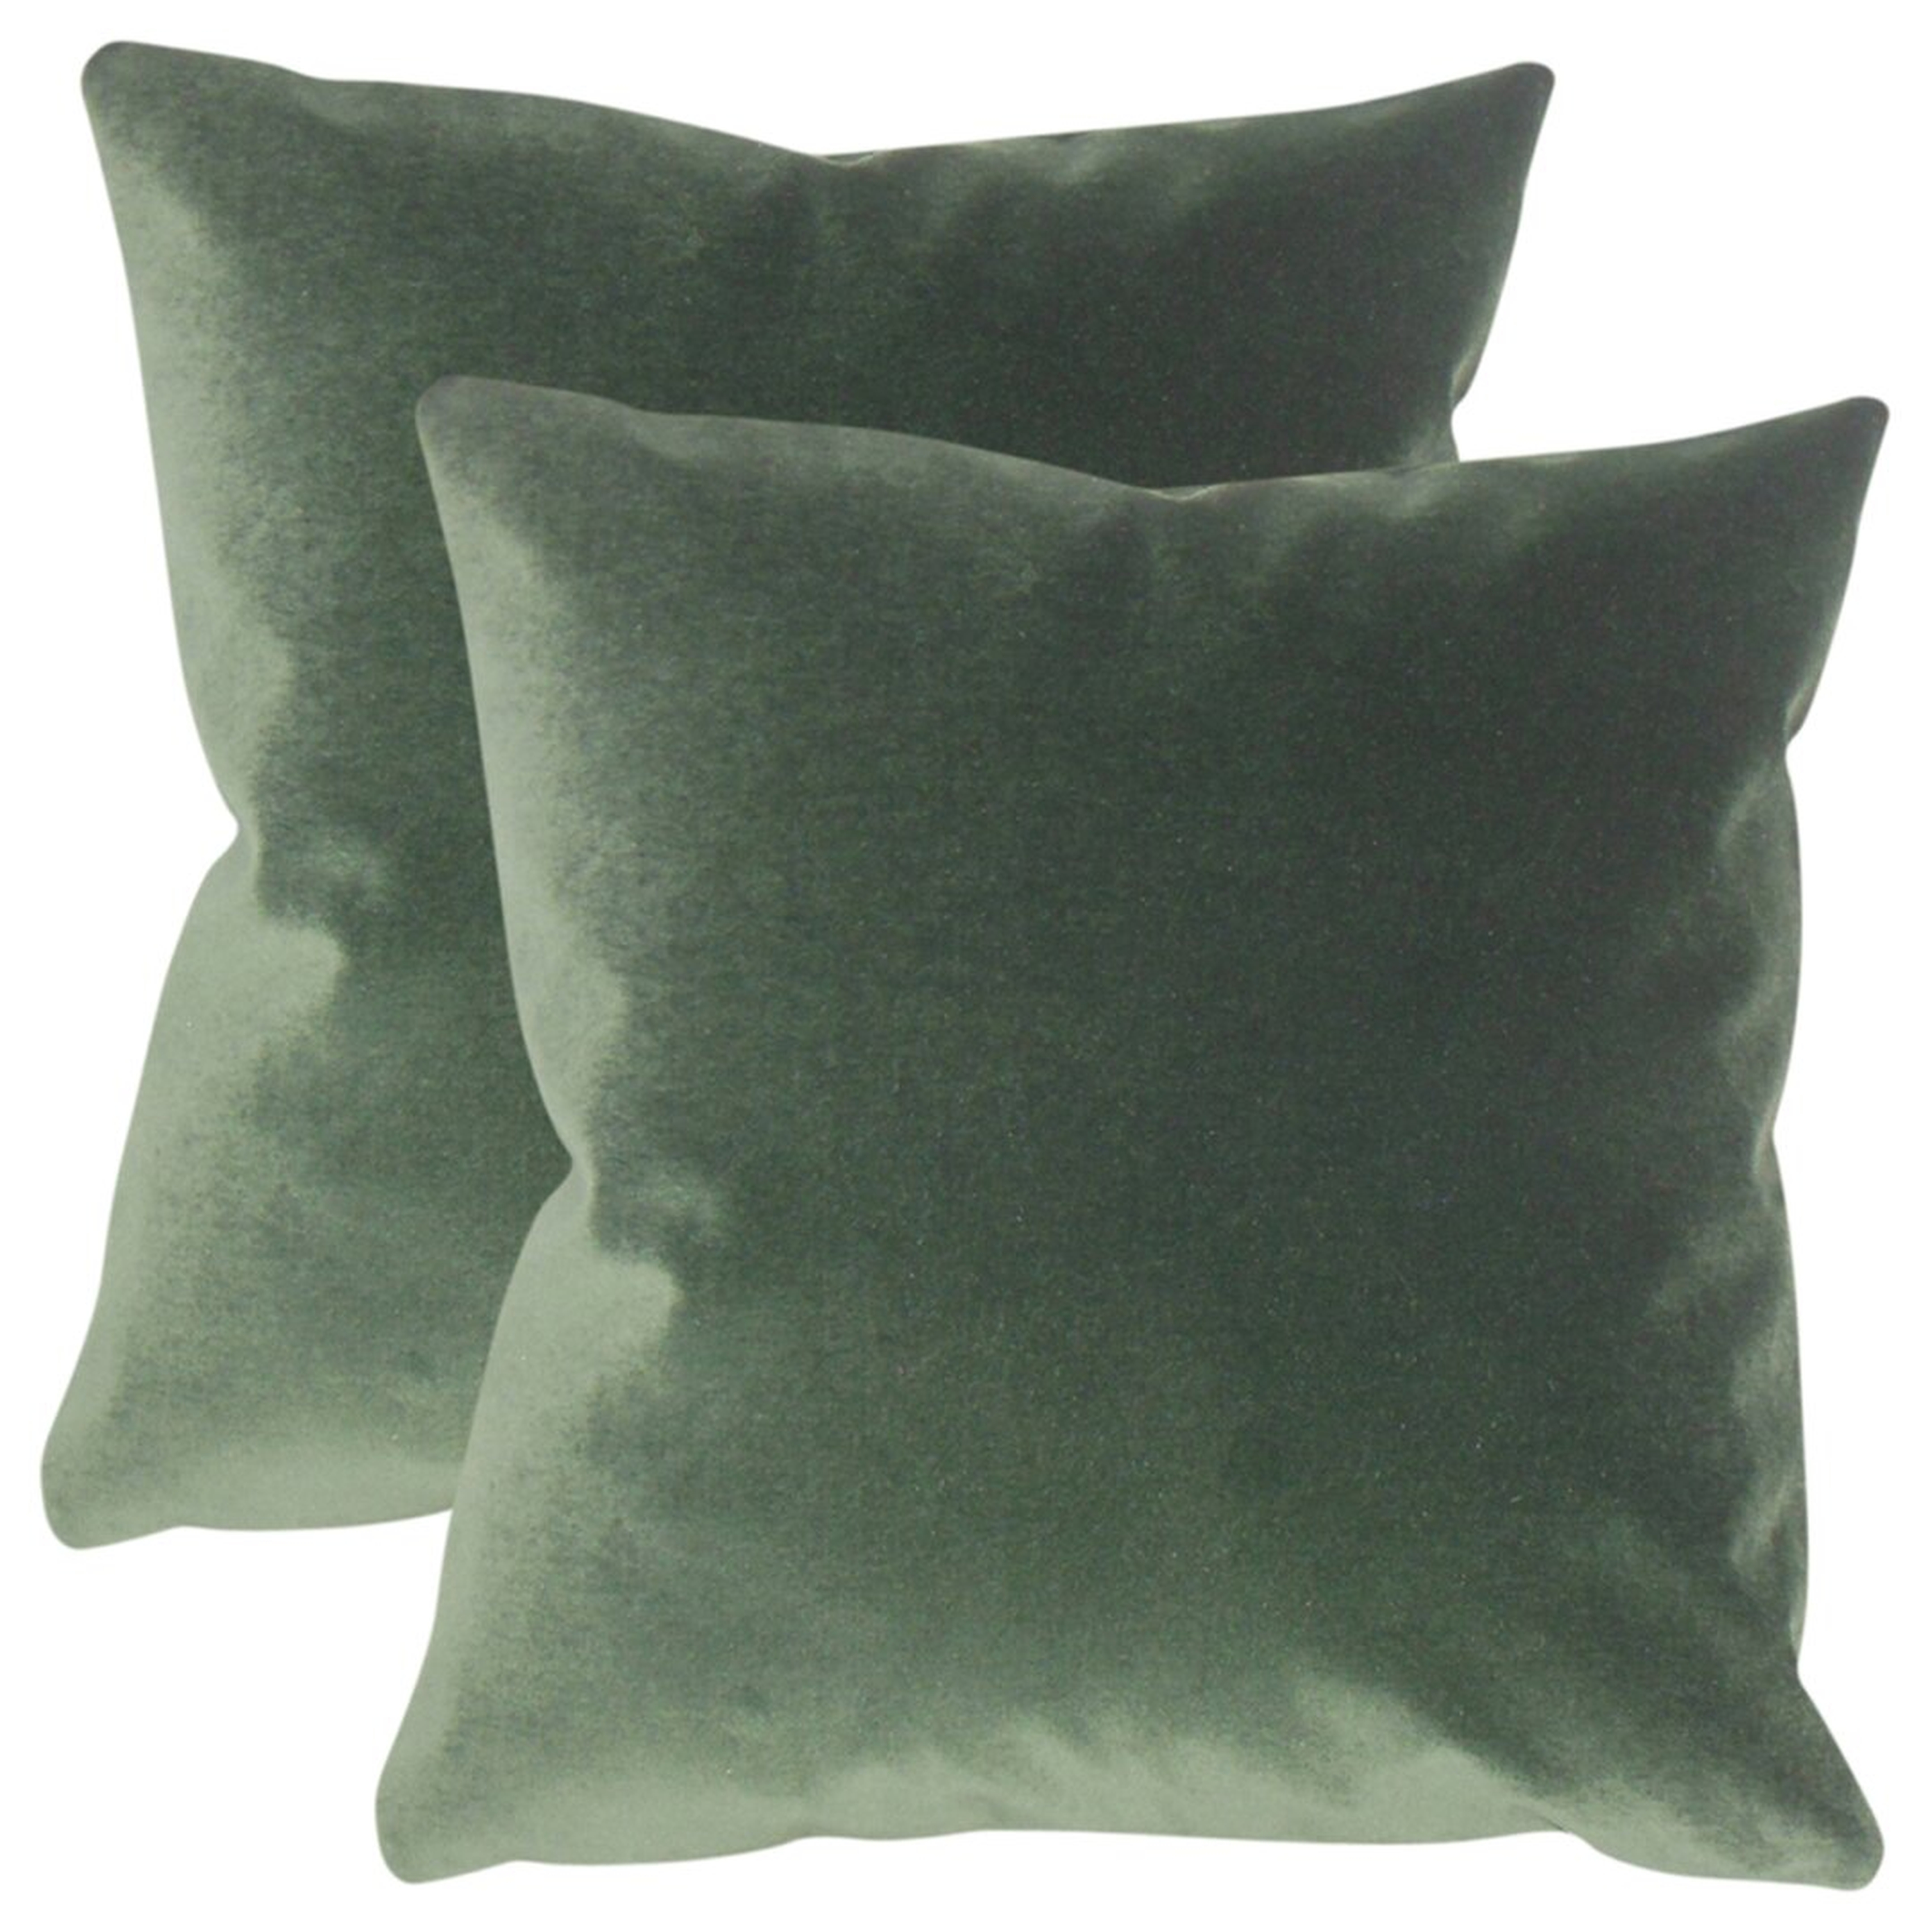 "The Pillow Collection Arison Cotton Throw Pillow" (set of 2) - Perigold